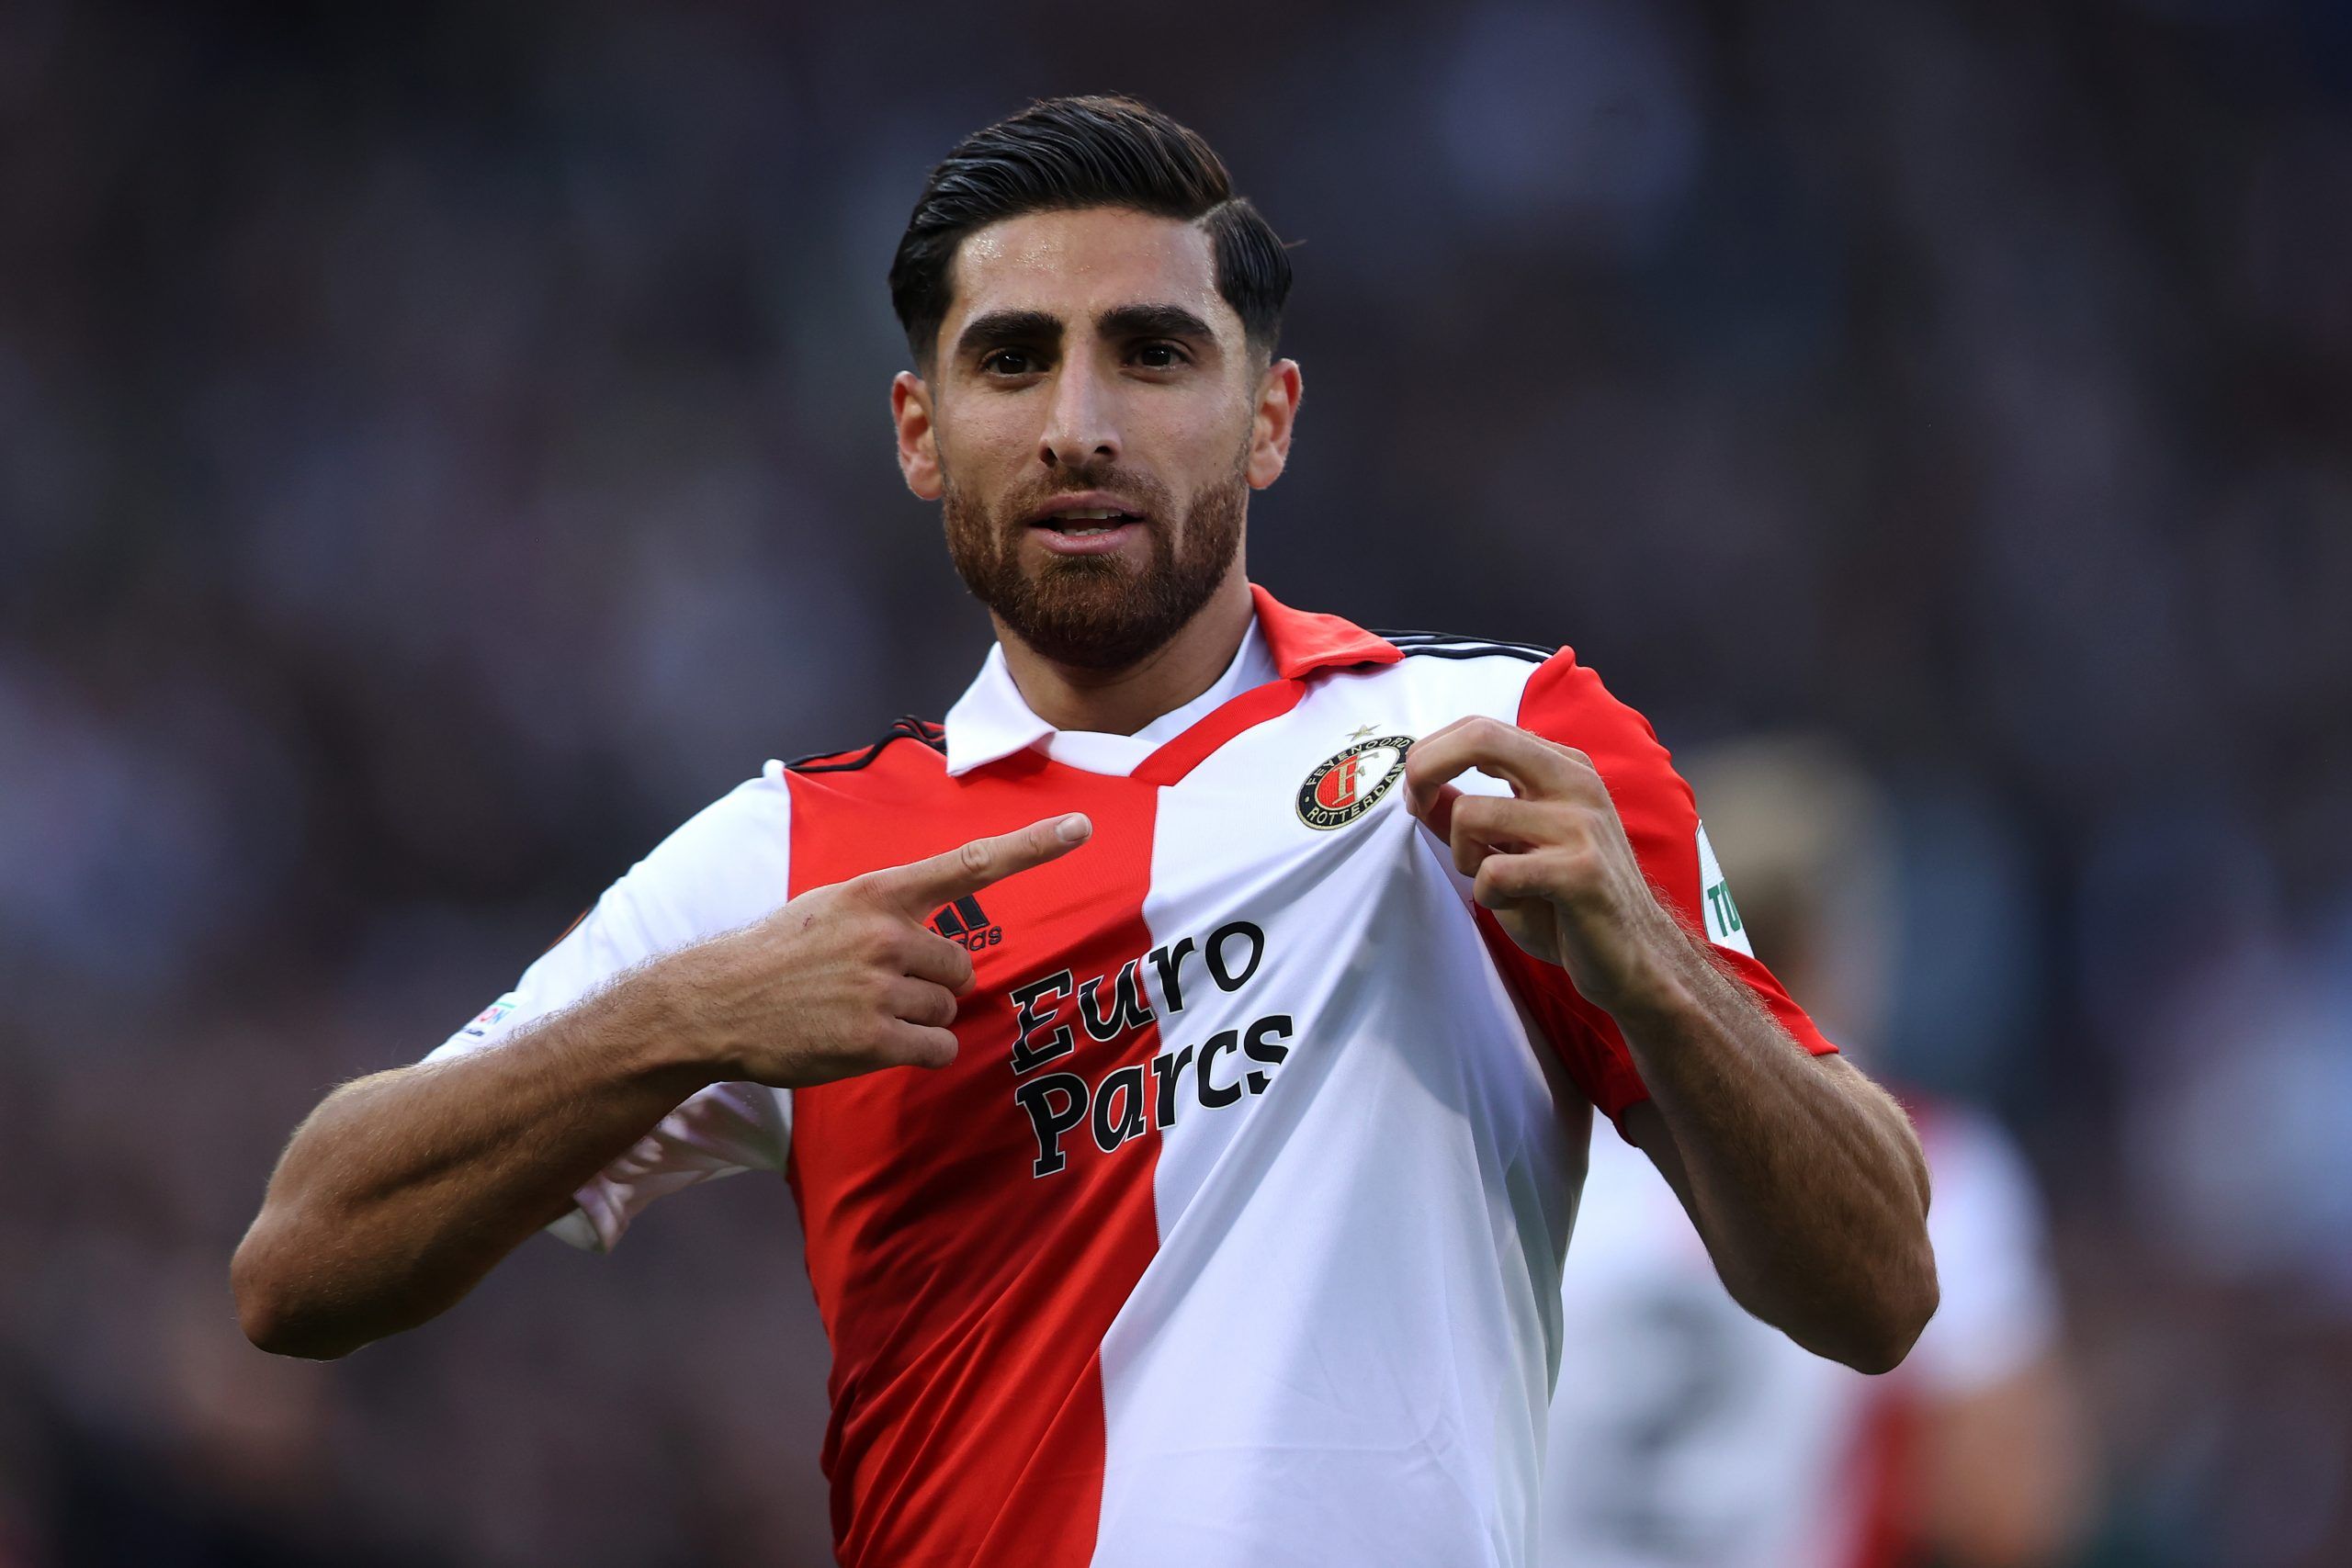 Castore to replace Adidas as Feyenoord's kit supplier season - Get Belgian & Dutch Football News